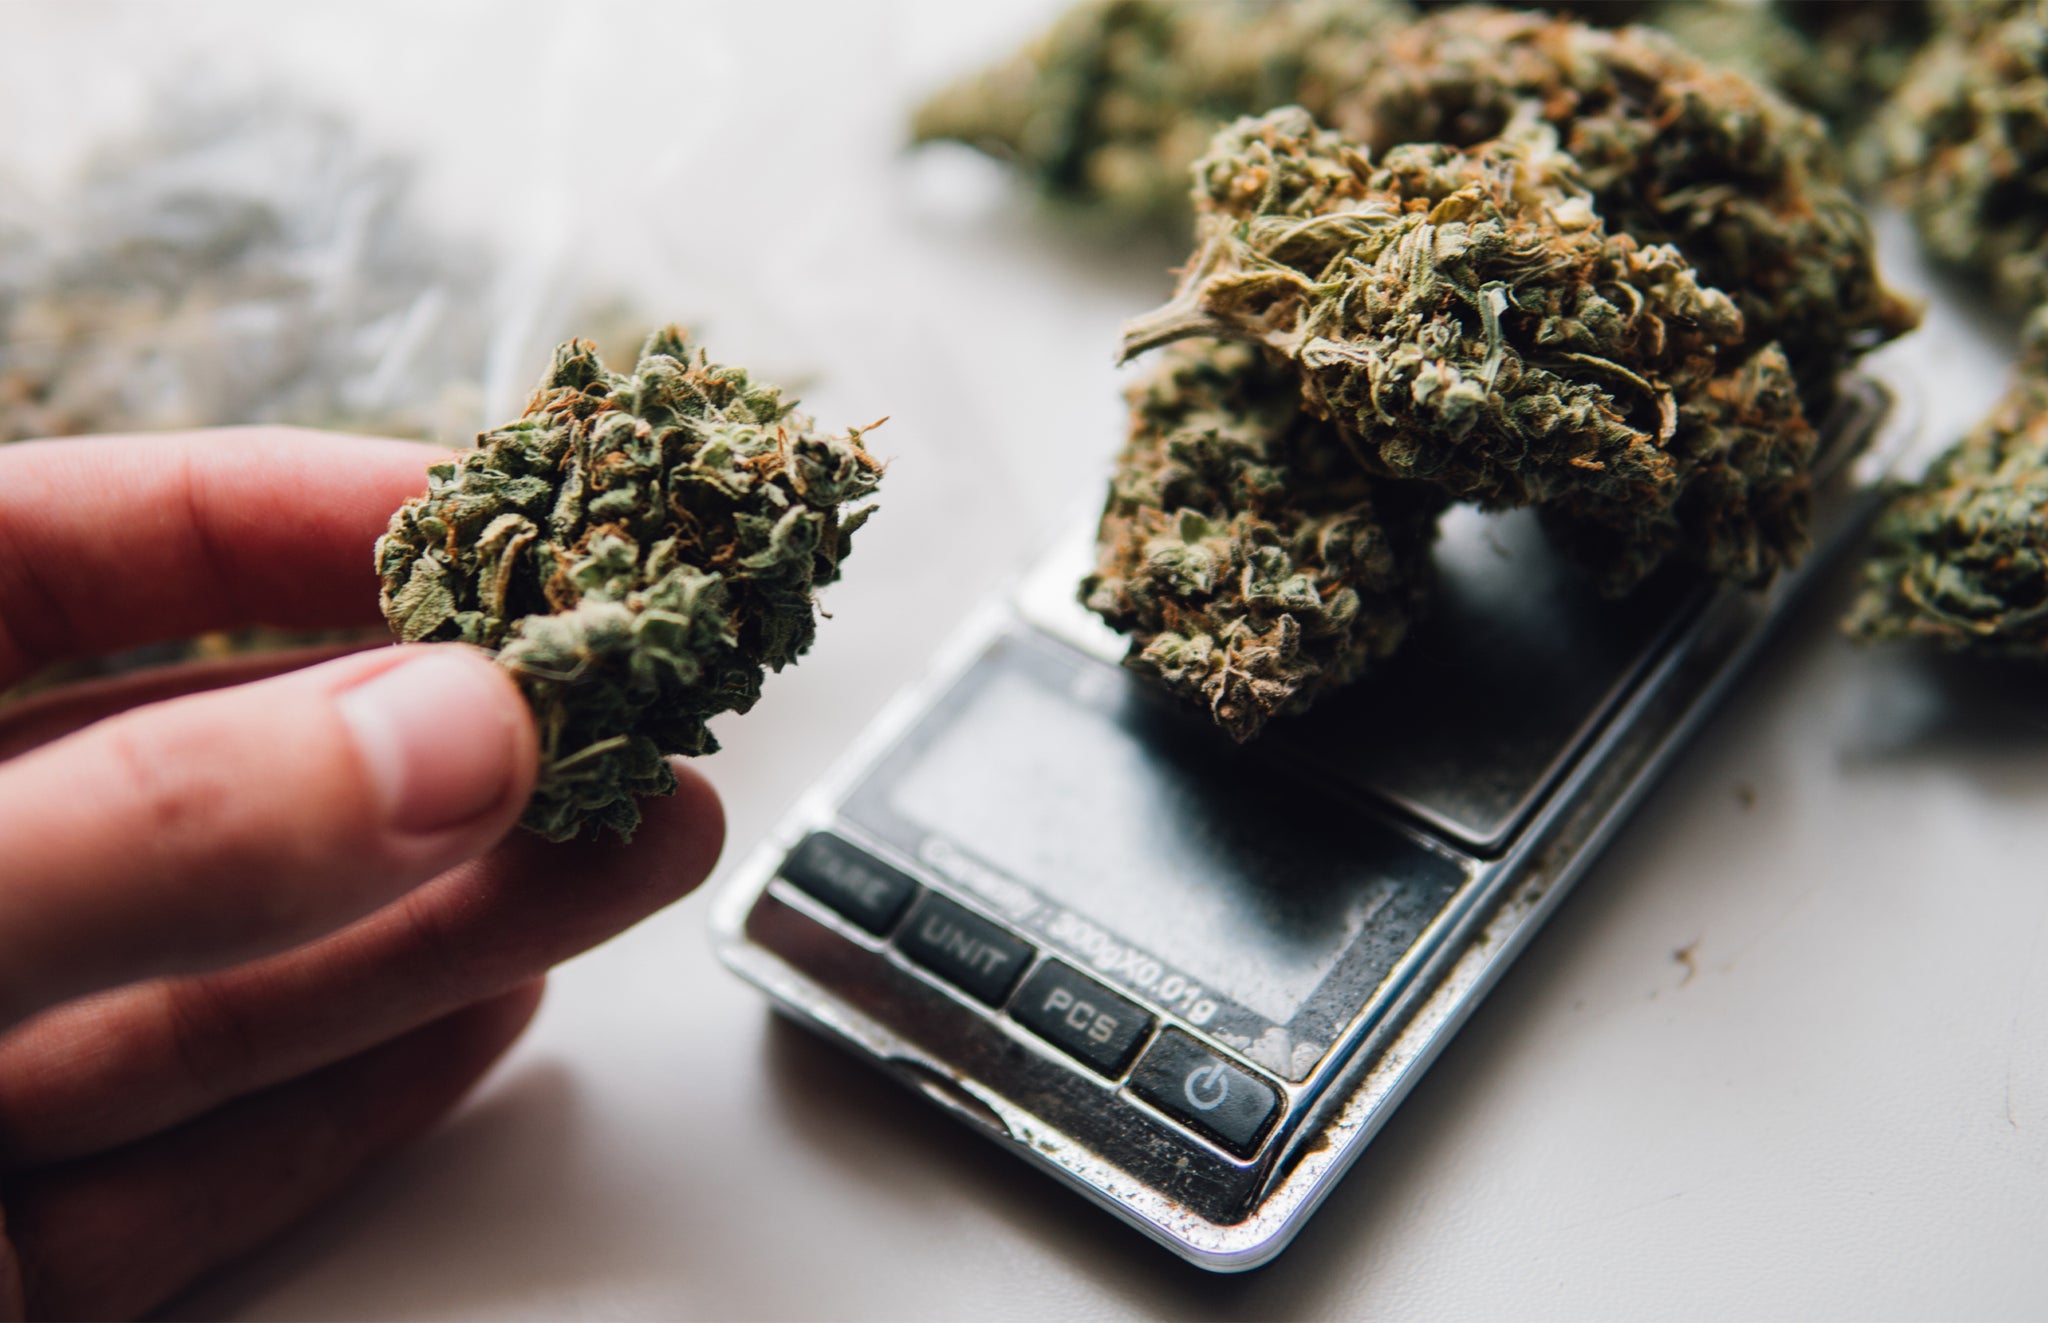 What is a Zip of Marijuana? Weed Measurements Guide